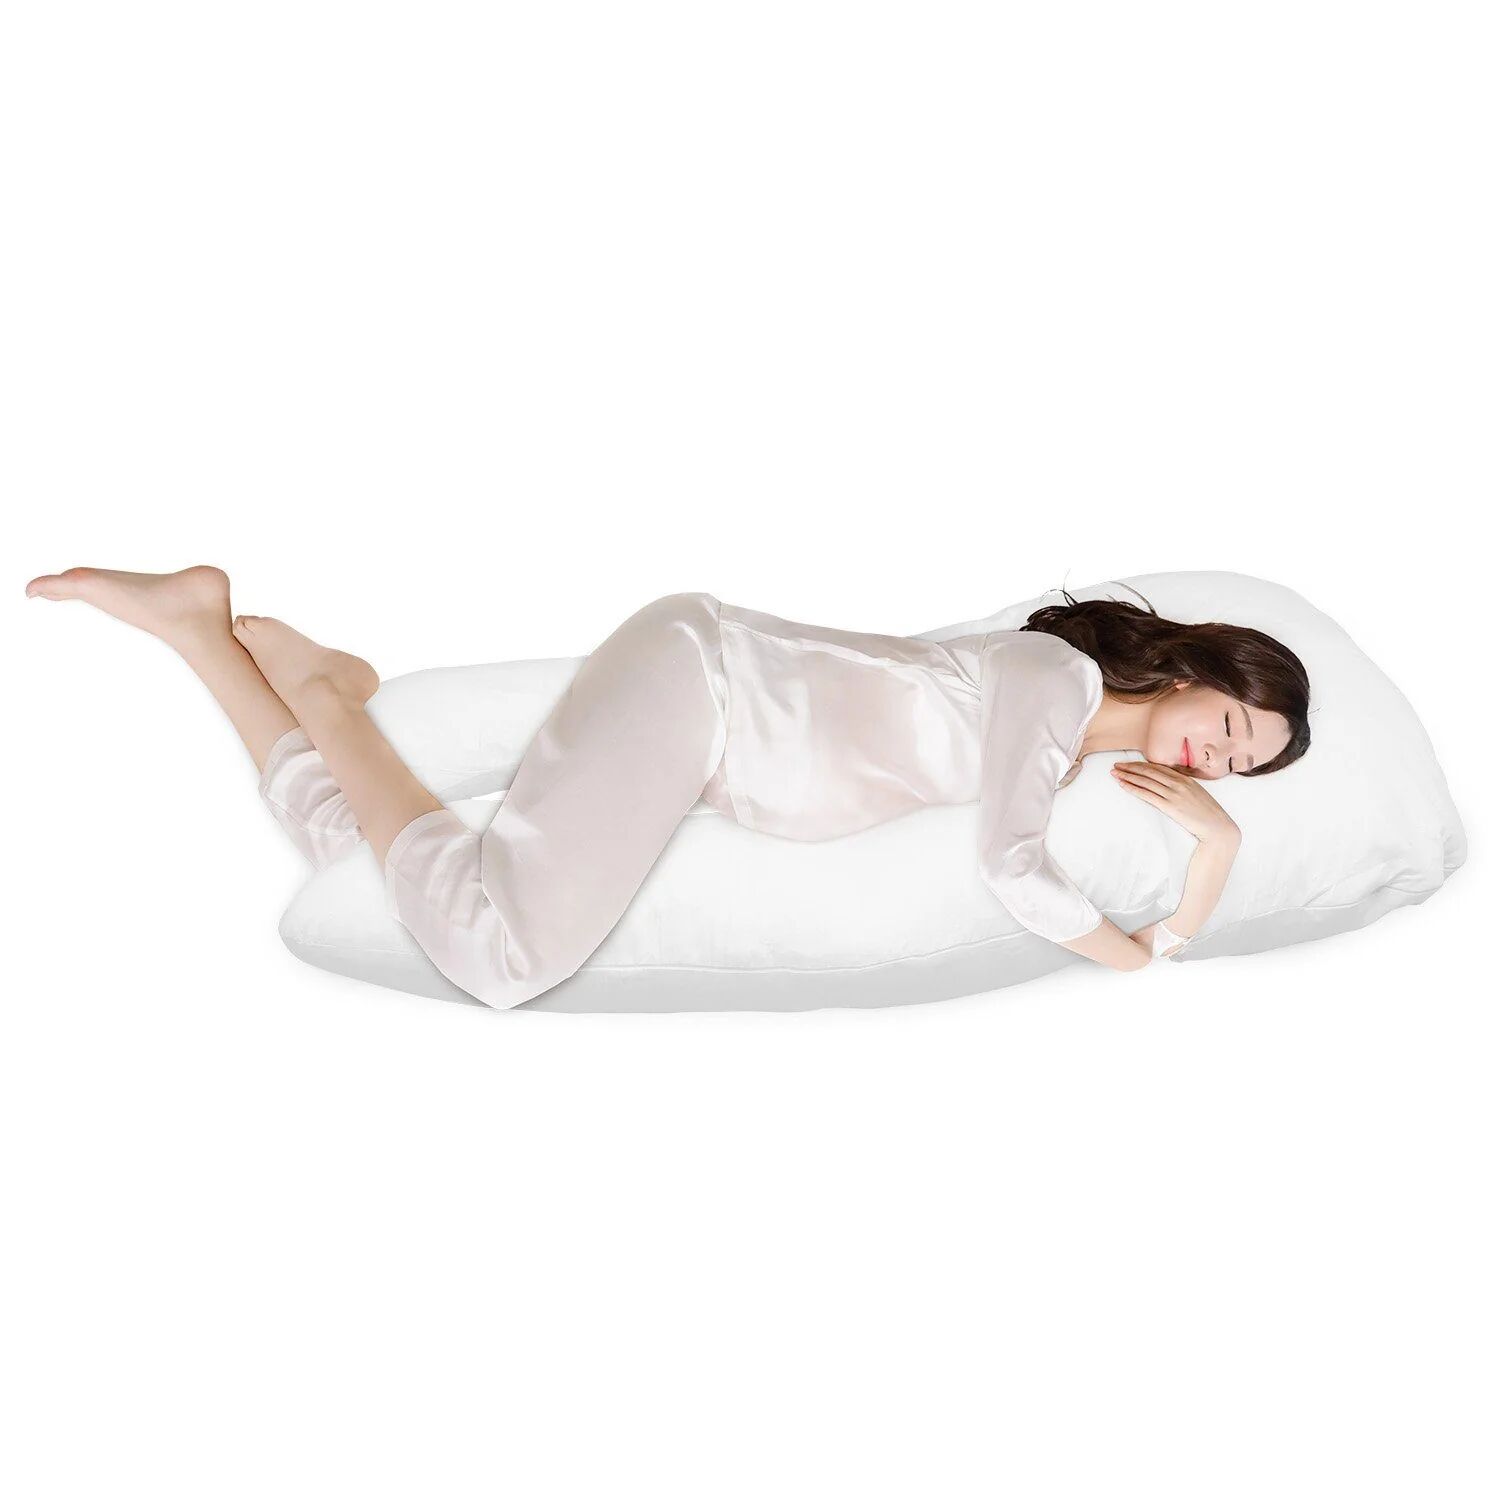 DailySale U-Shaped Full Body Pillow